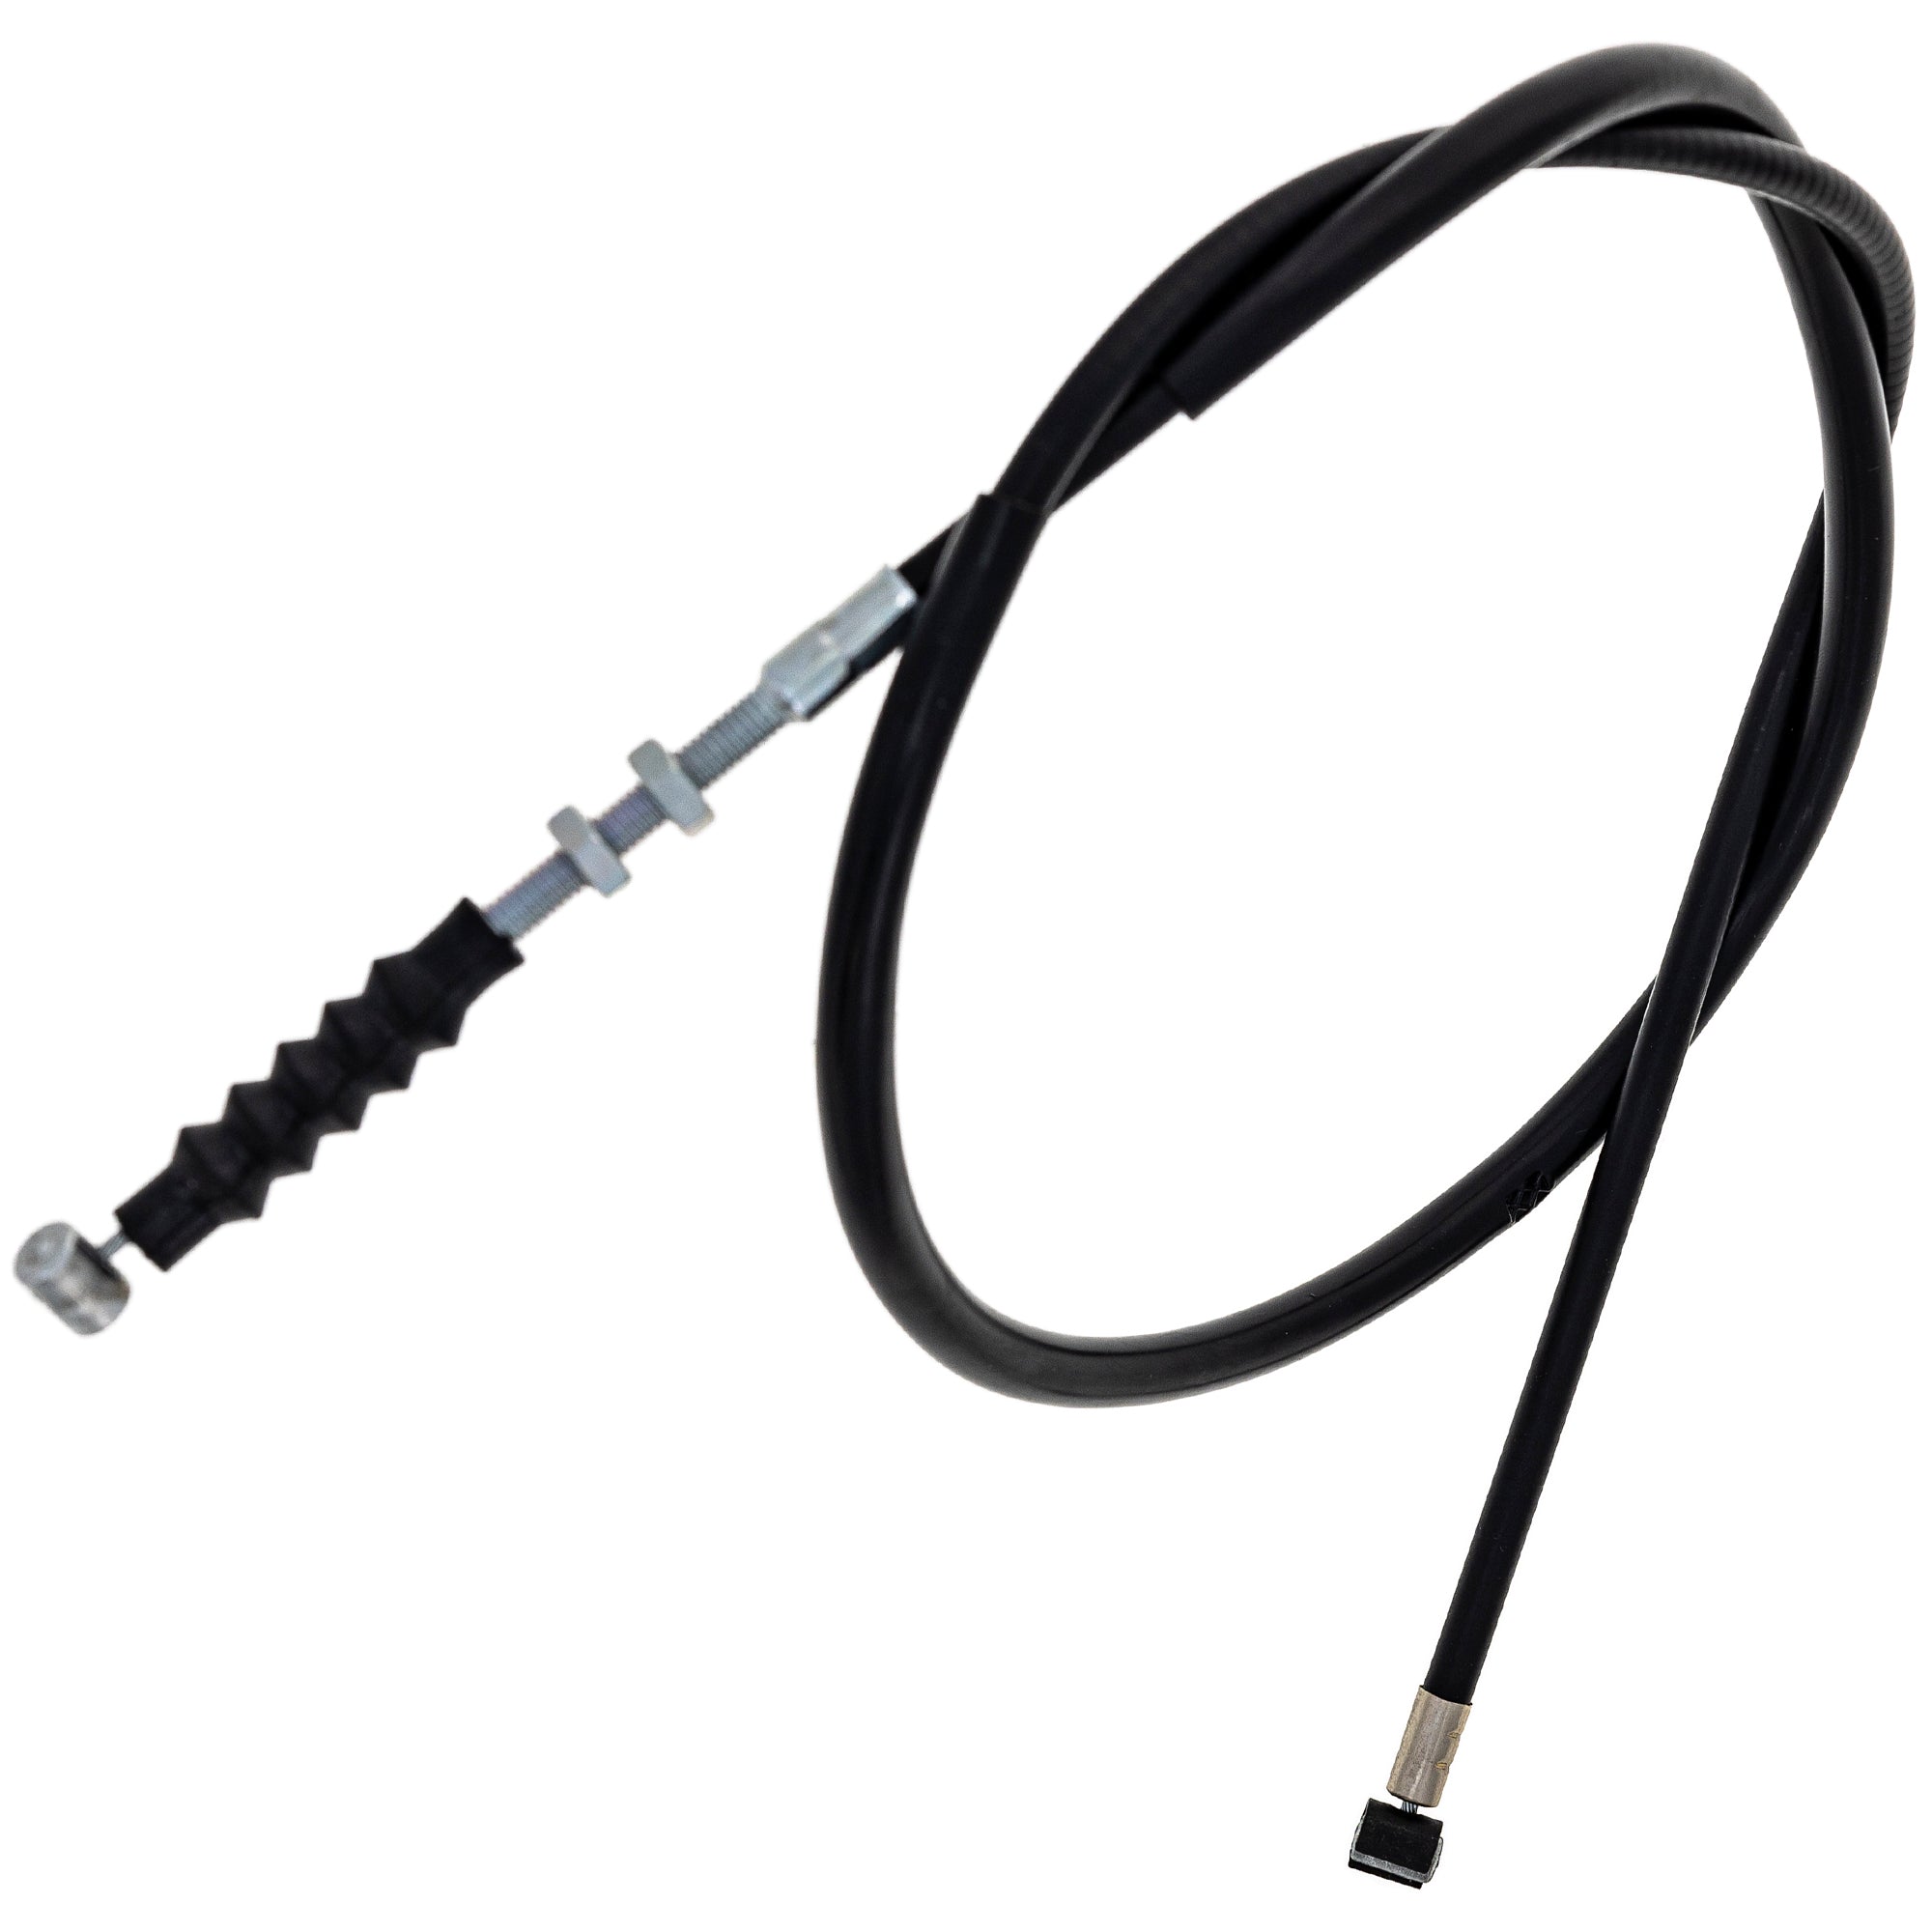 Front Brake Cable for Kawasaki KLX110 54005-0026 Motorcycles